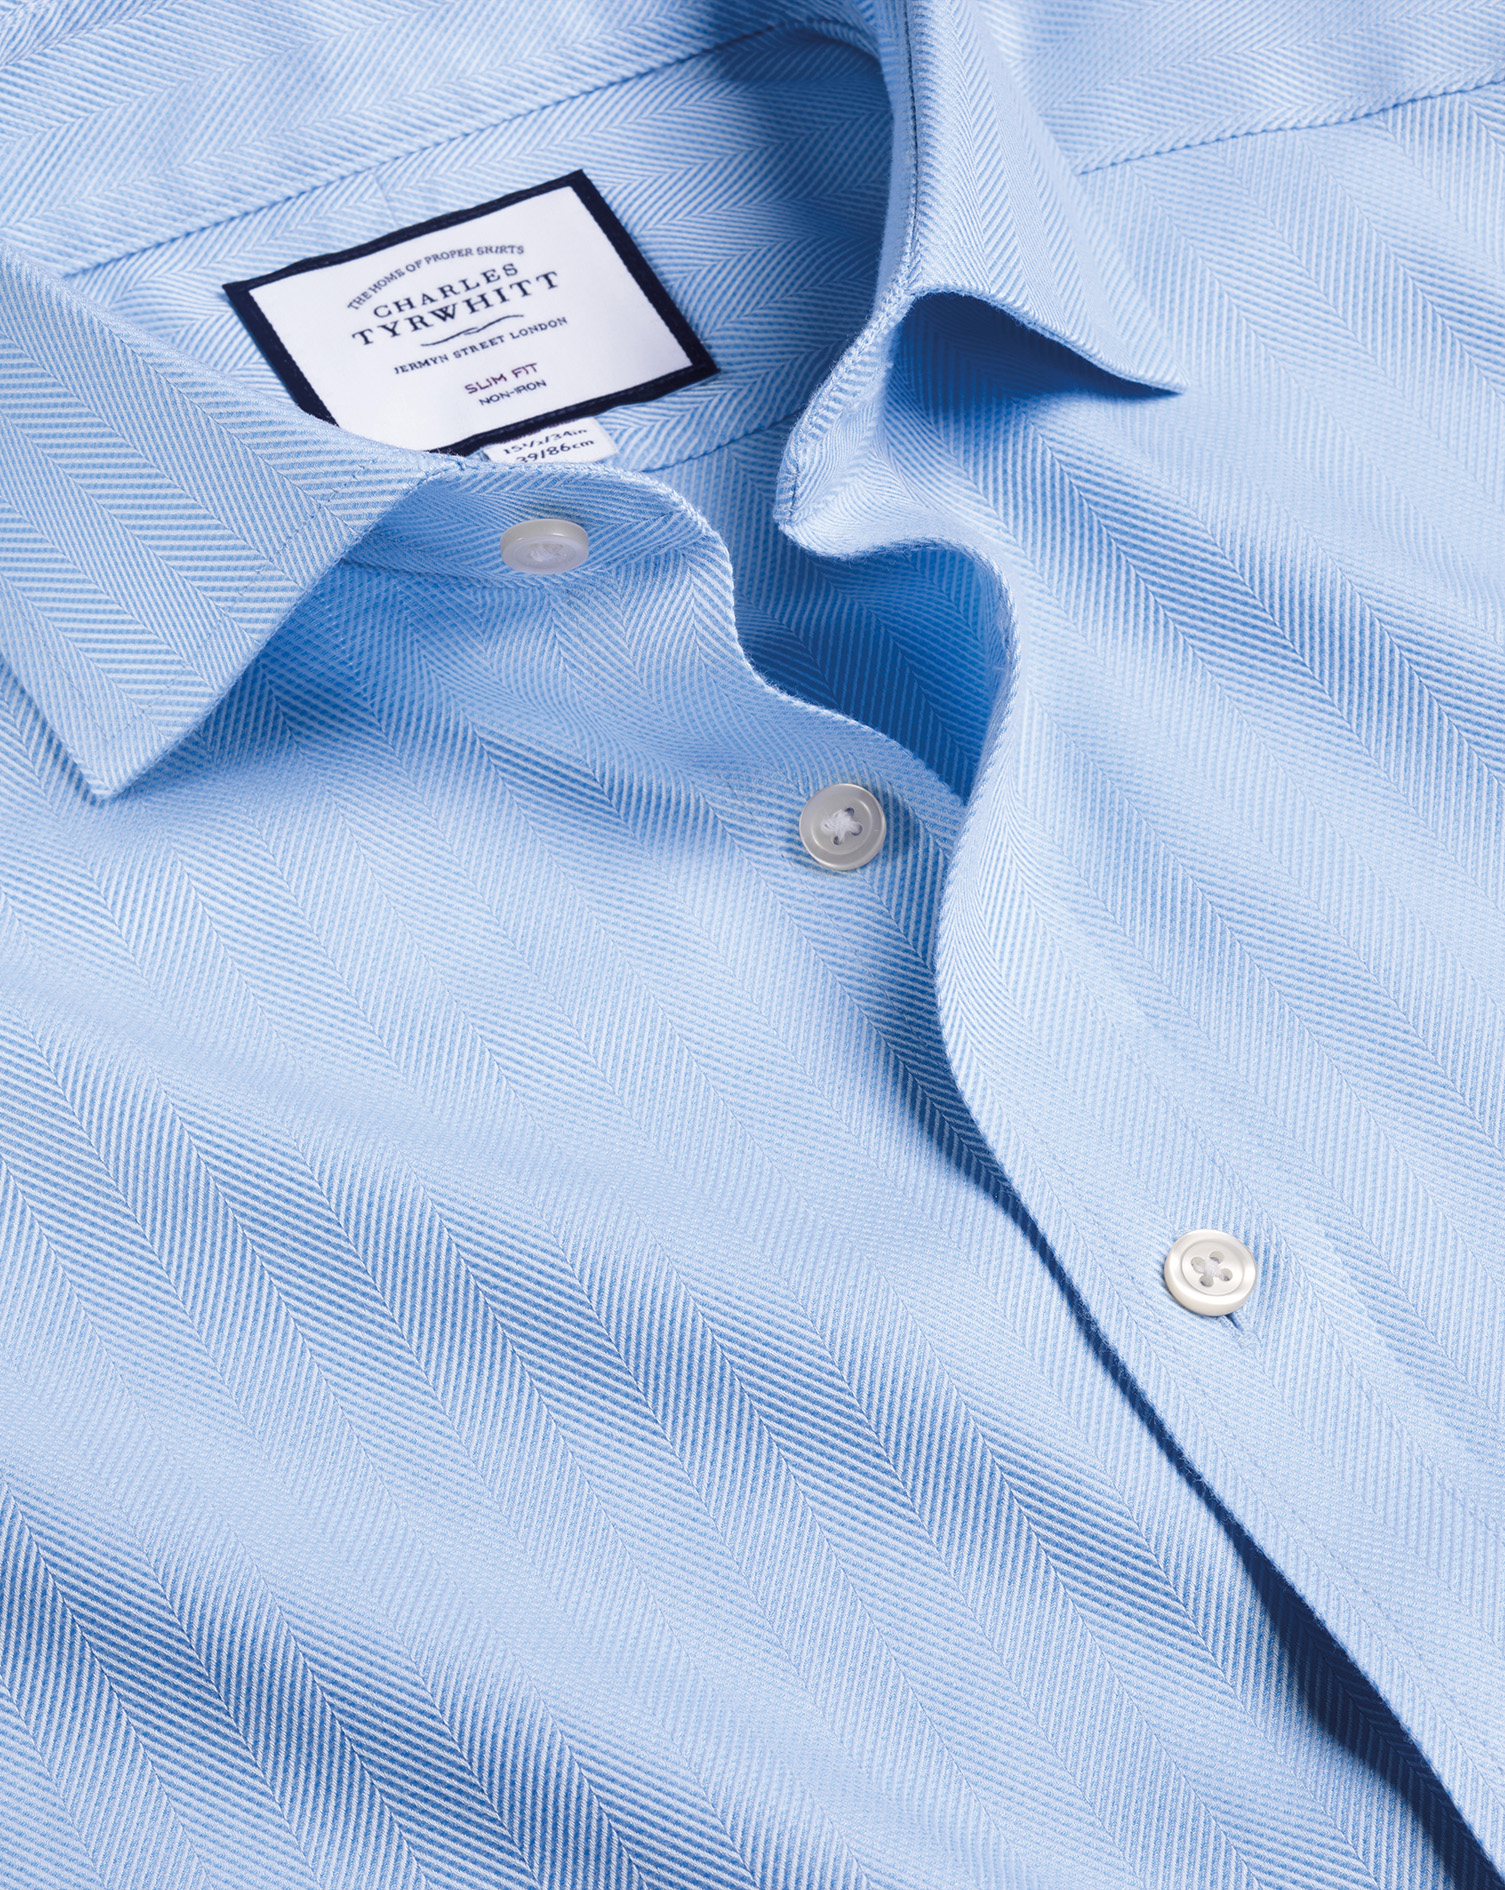 Men's Charles Tyrwhitt Cutaway Collar Non-Iron Herringbone Dress Shirt - Sky Blue Single Cuff Size M